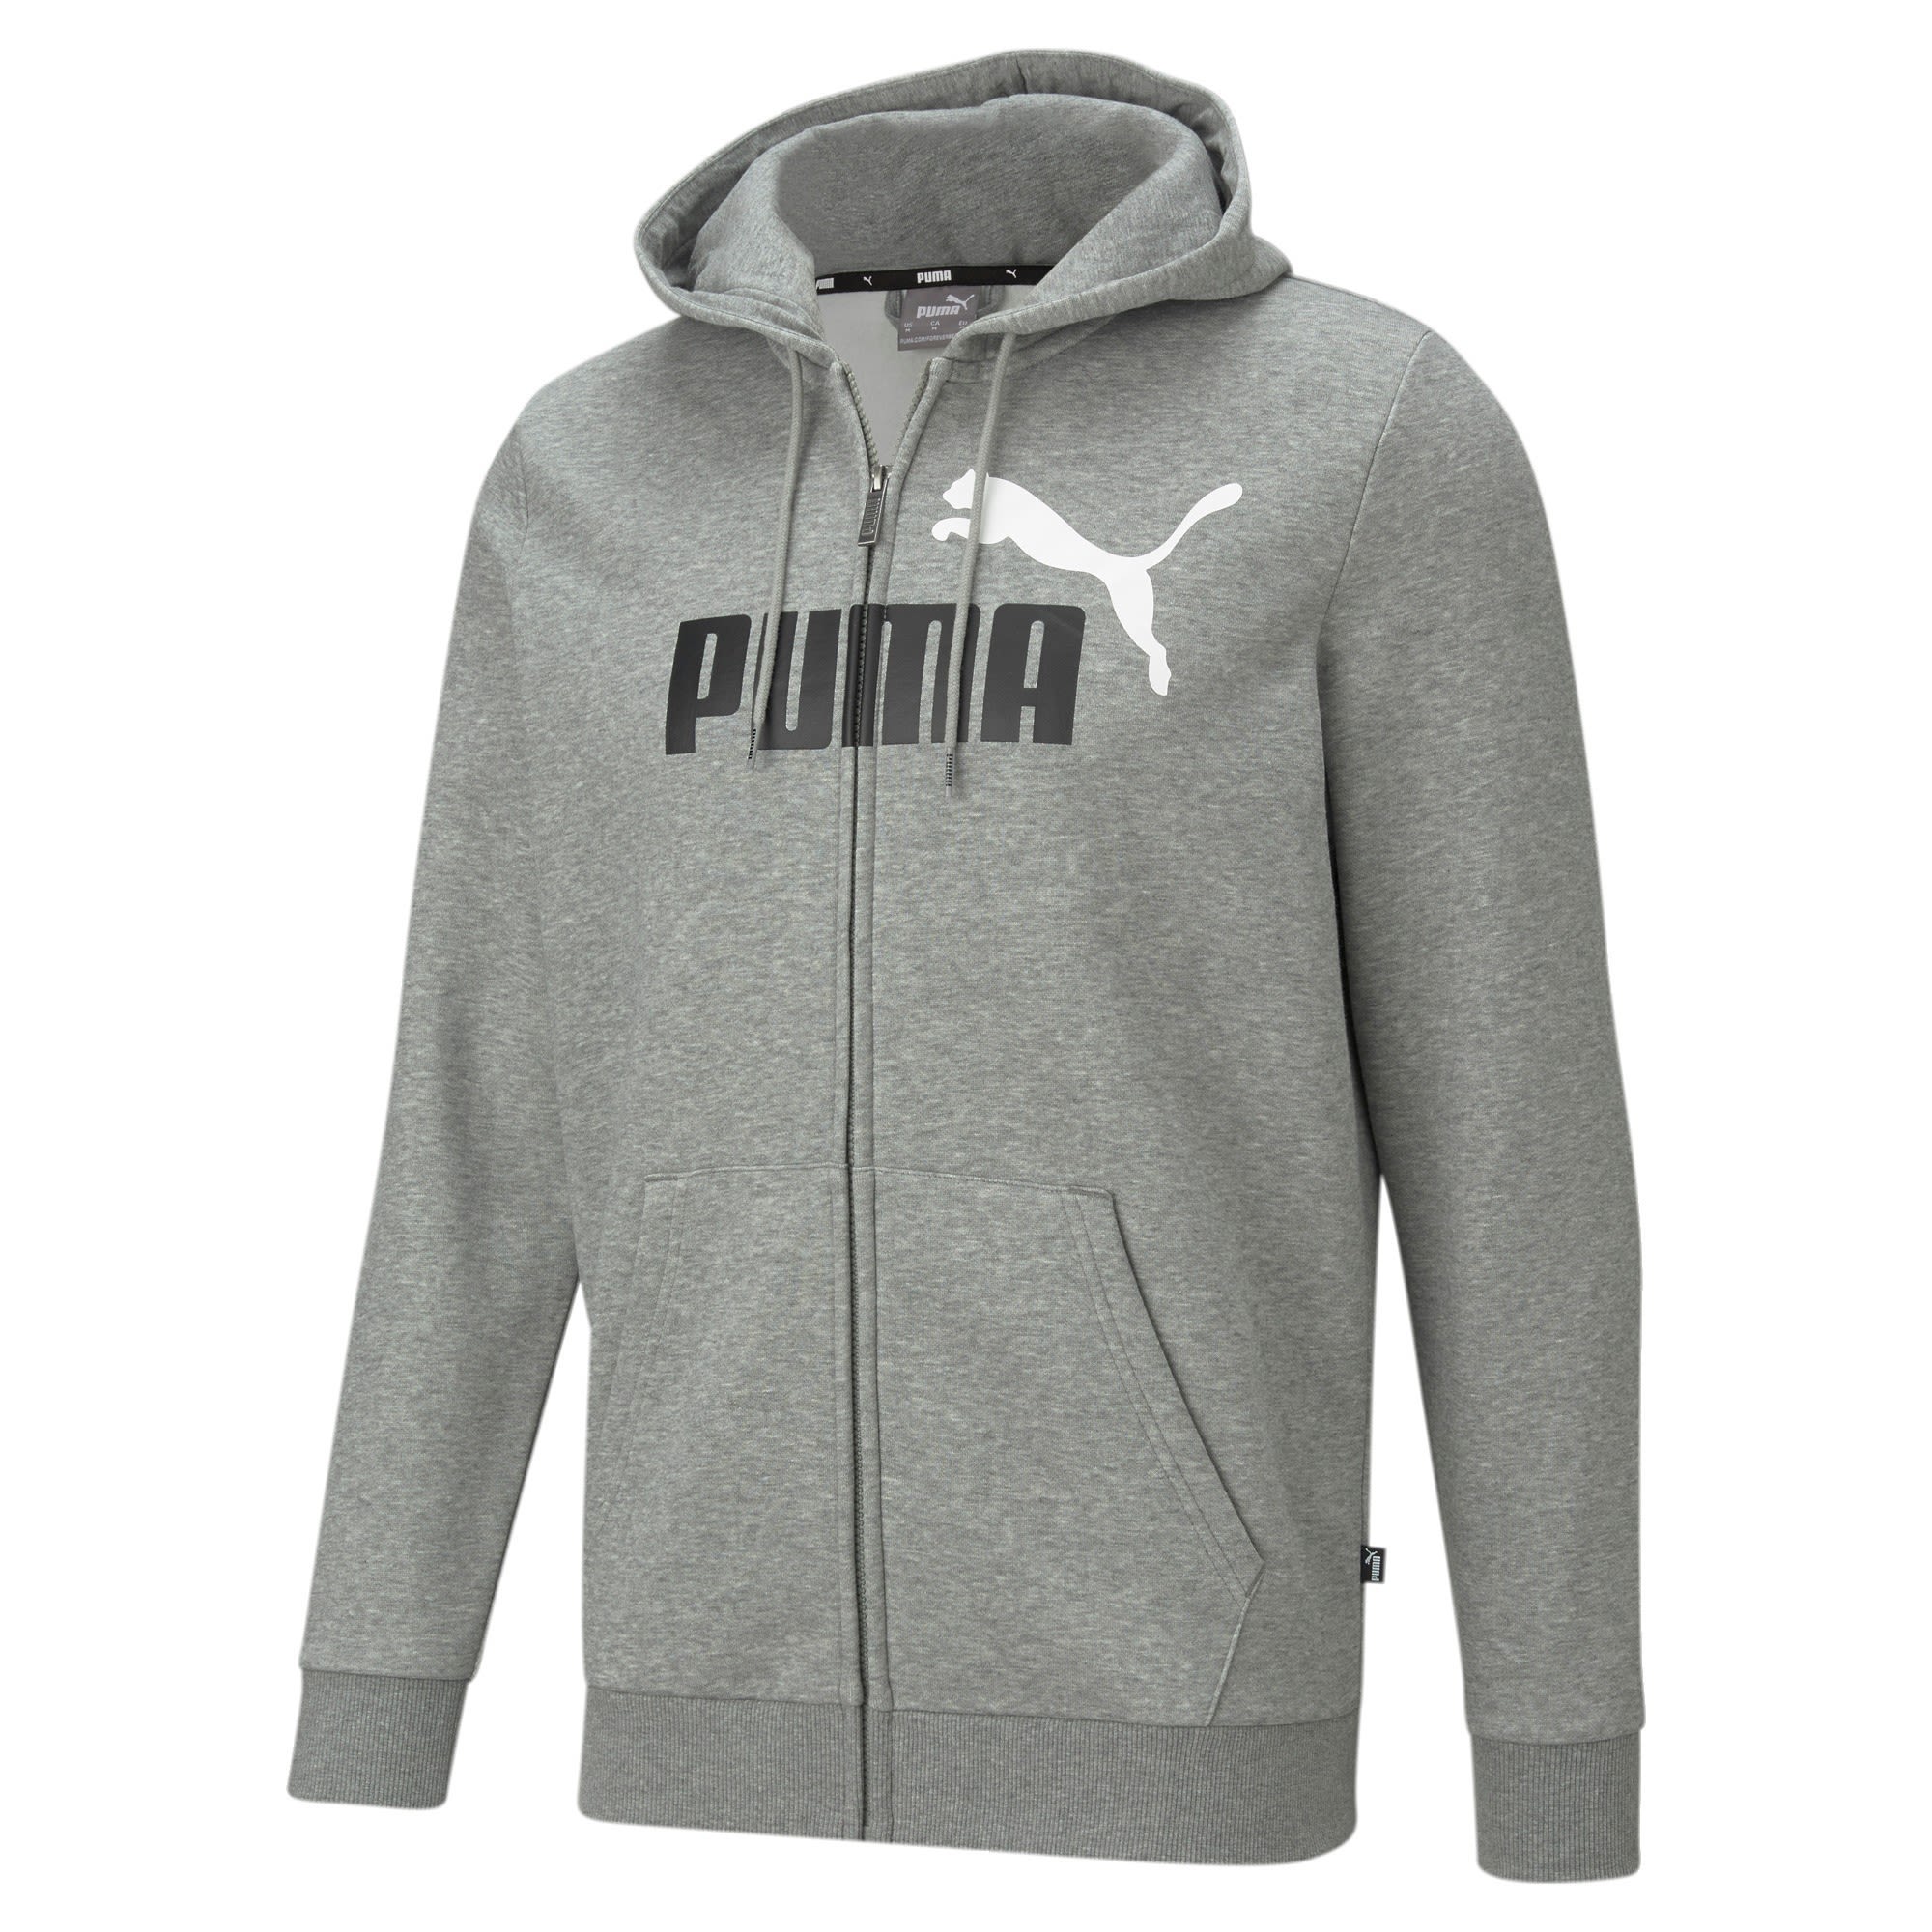 Puma Essentials+ 2 Color Full Zip Hoodie Grau- Male Anoraks- Grsse S - Farbe Medium Gray Heather